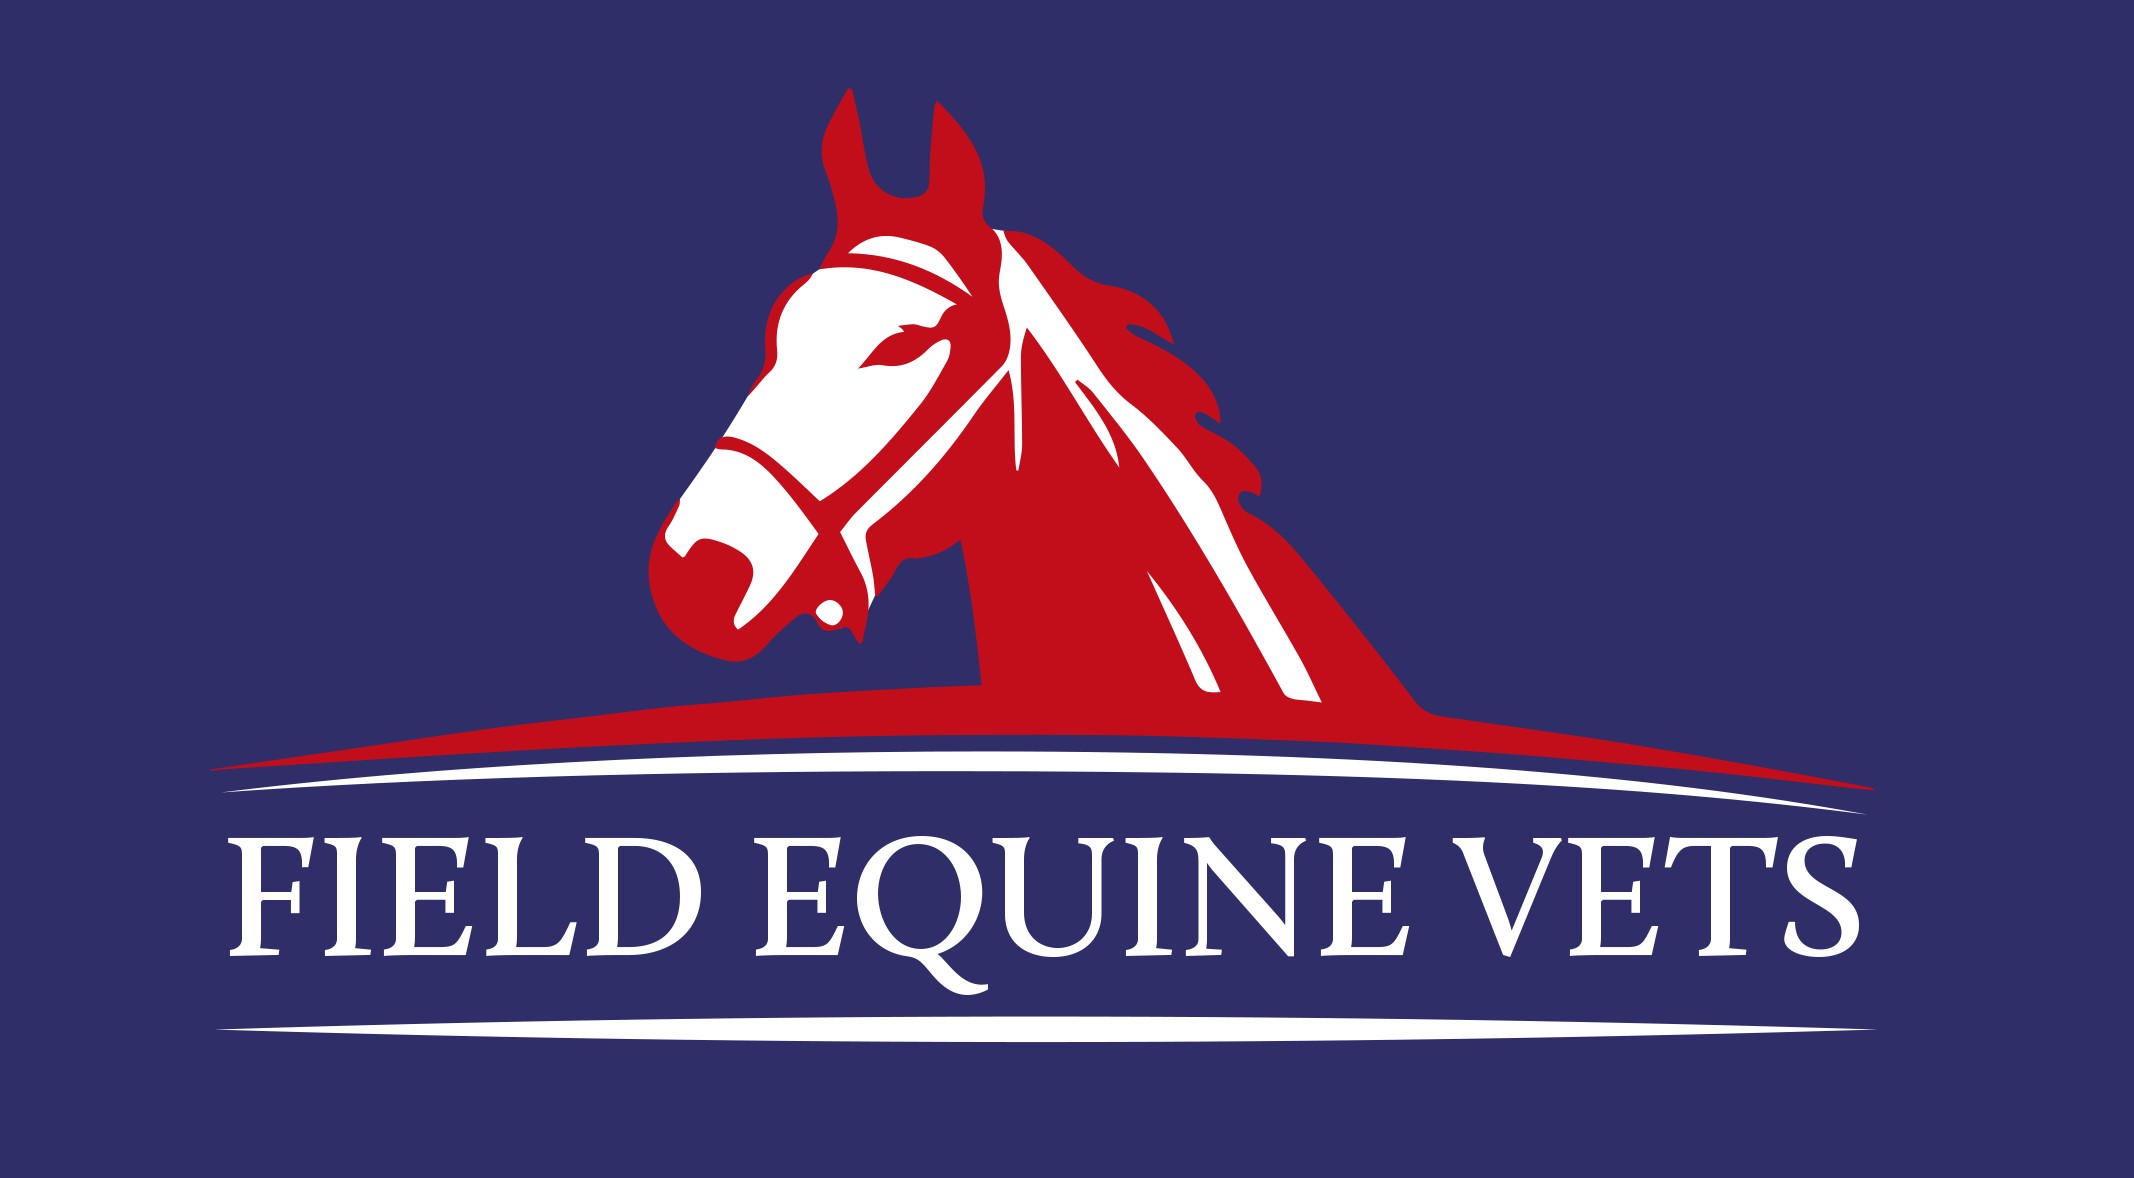 Field Equine Vets Ltd logo